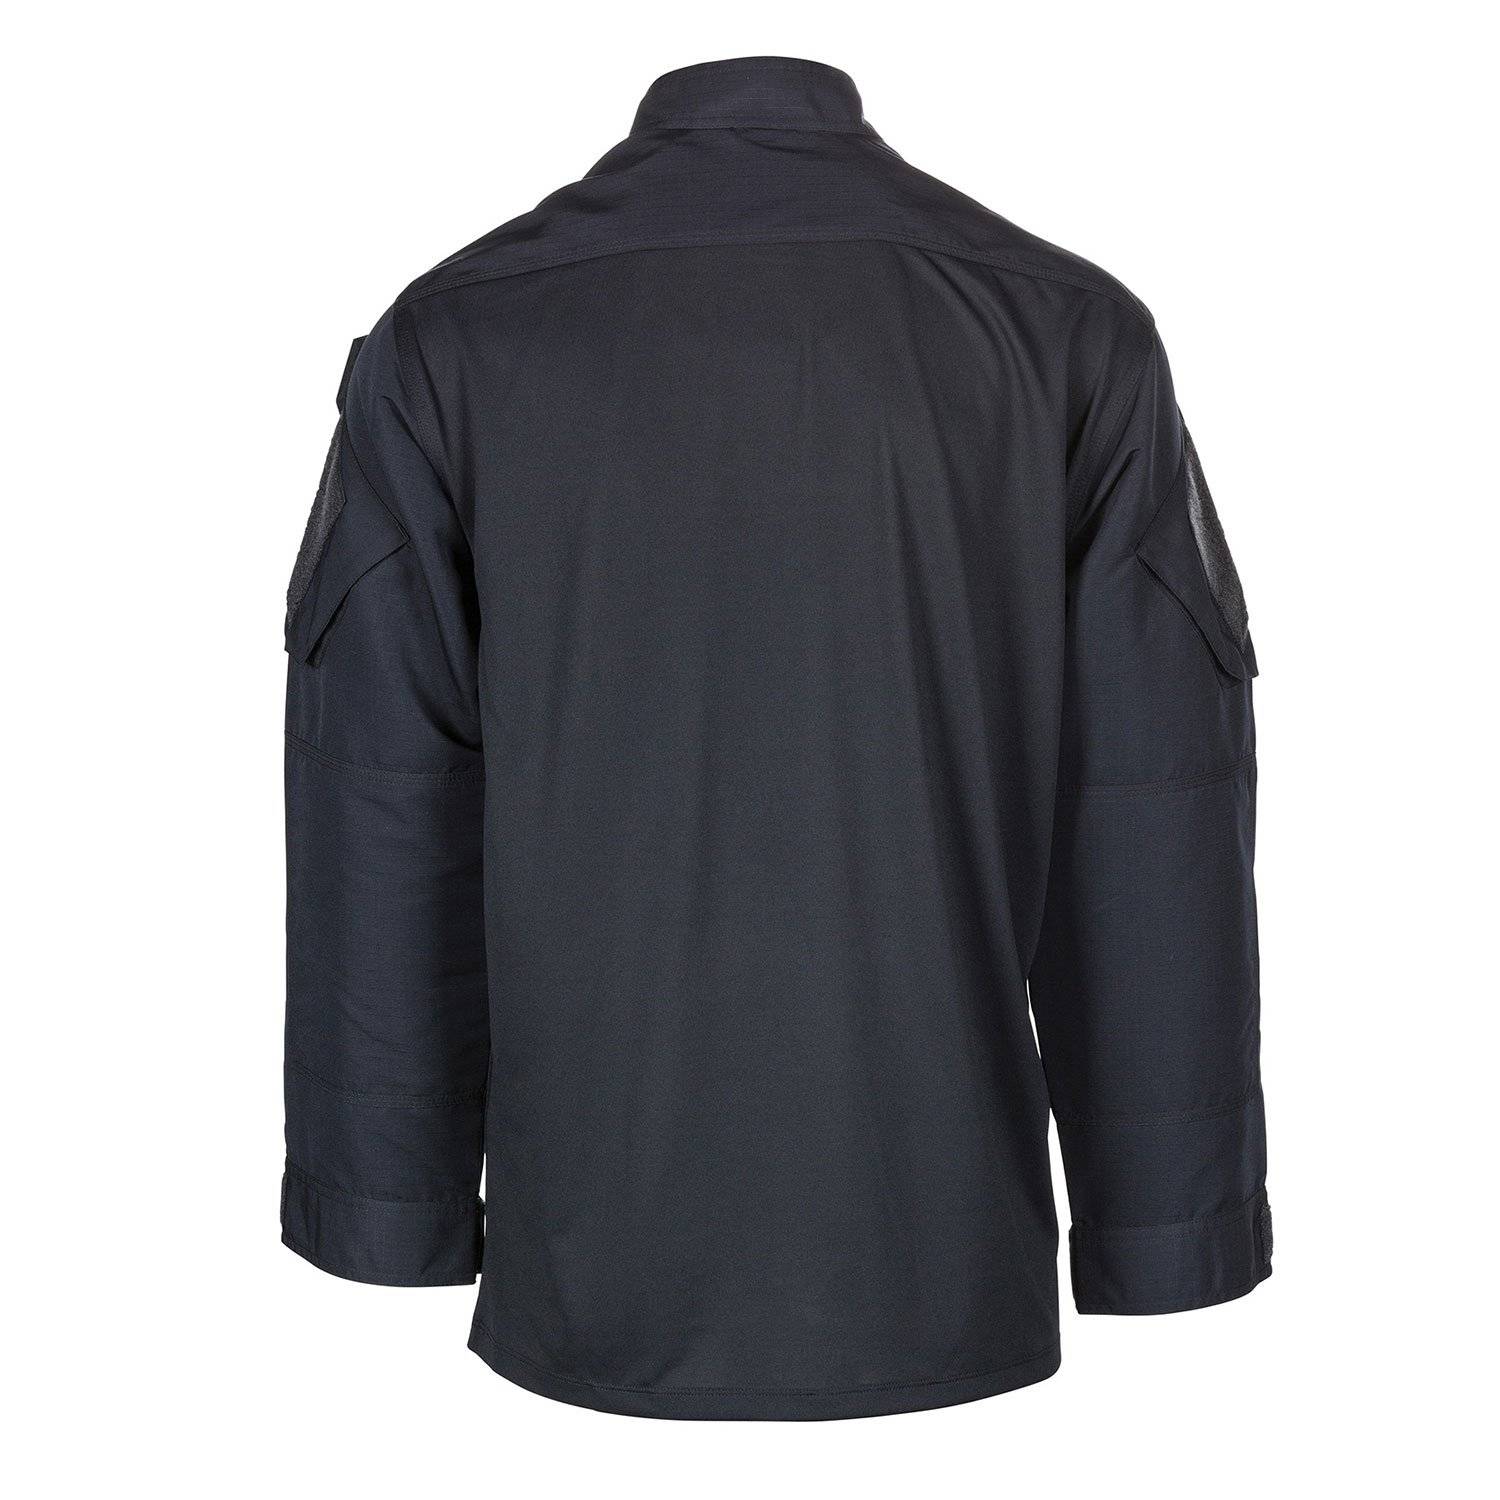 5.11 Fast-Tac TDU Rapid Shirt Long Sleeve